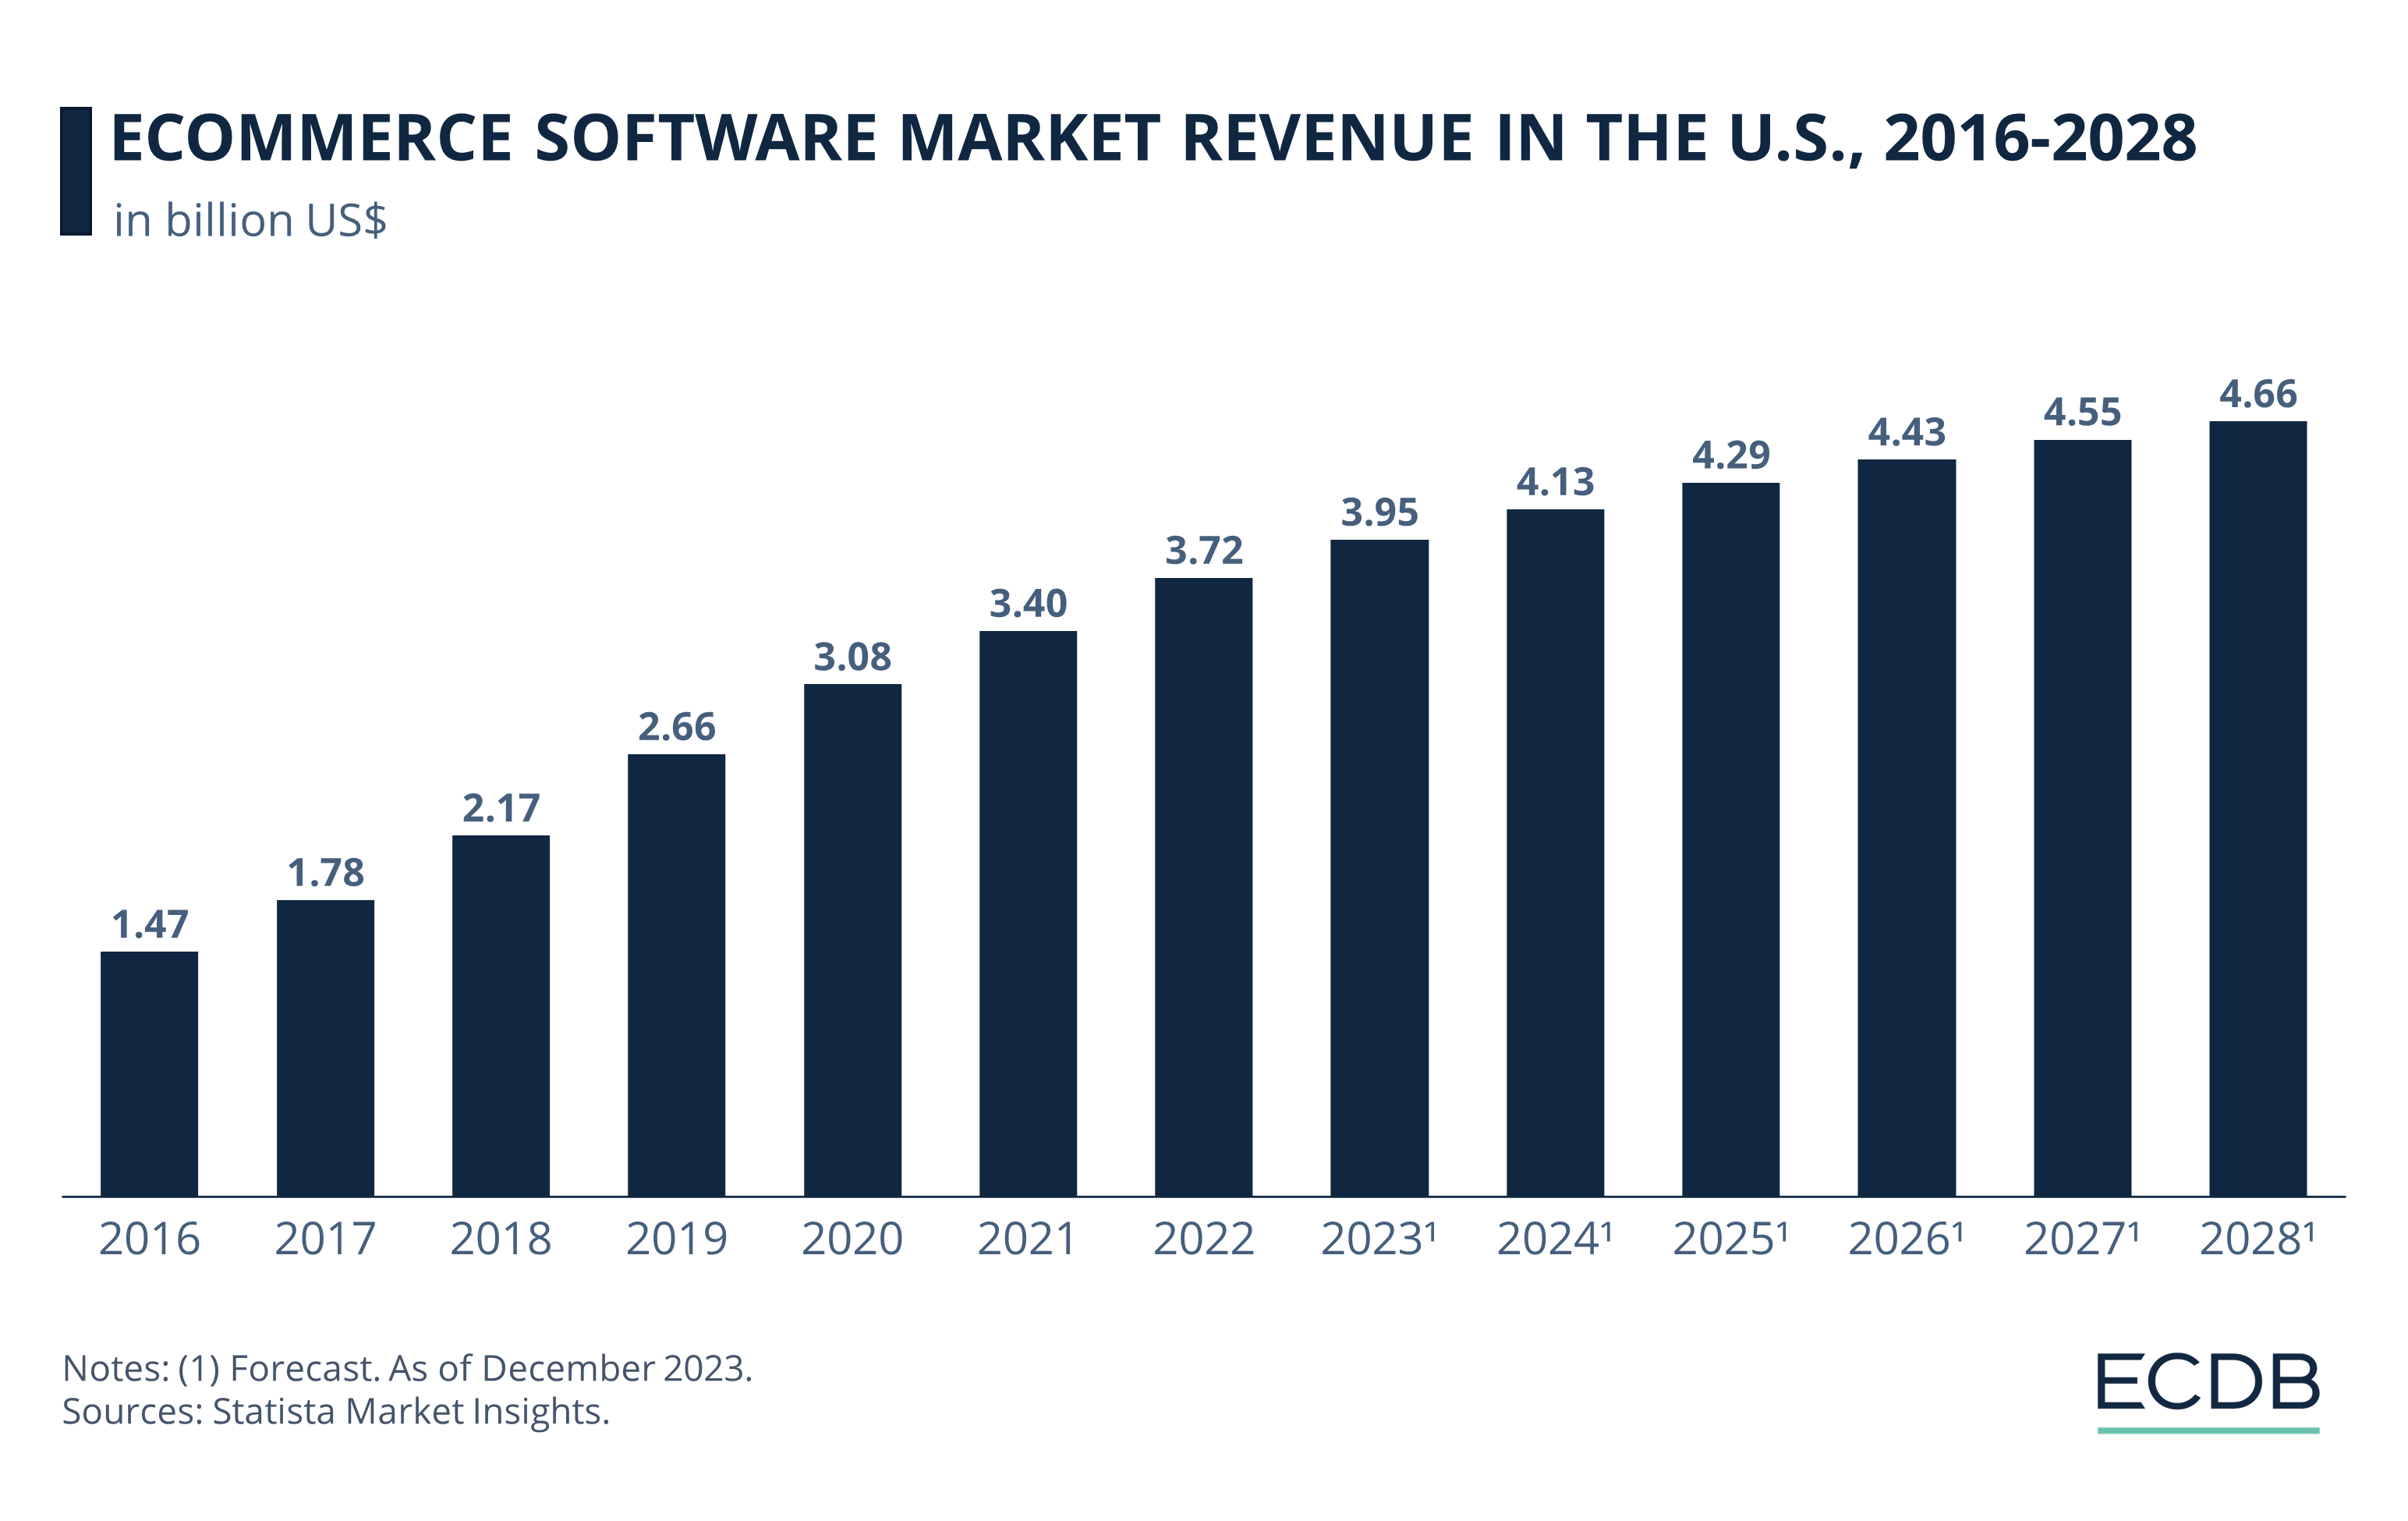 eCommerce Software Market Revenue in the U.S., 2016-2028